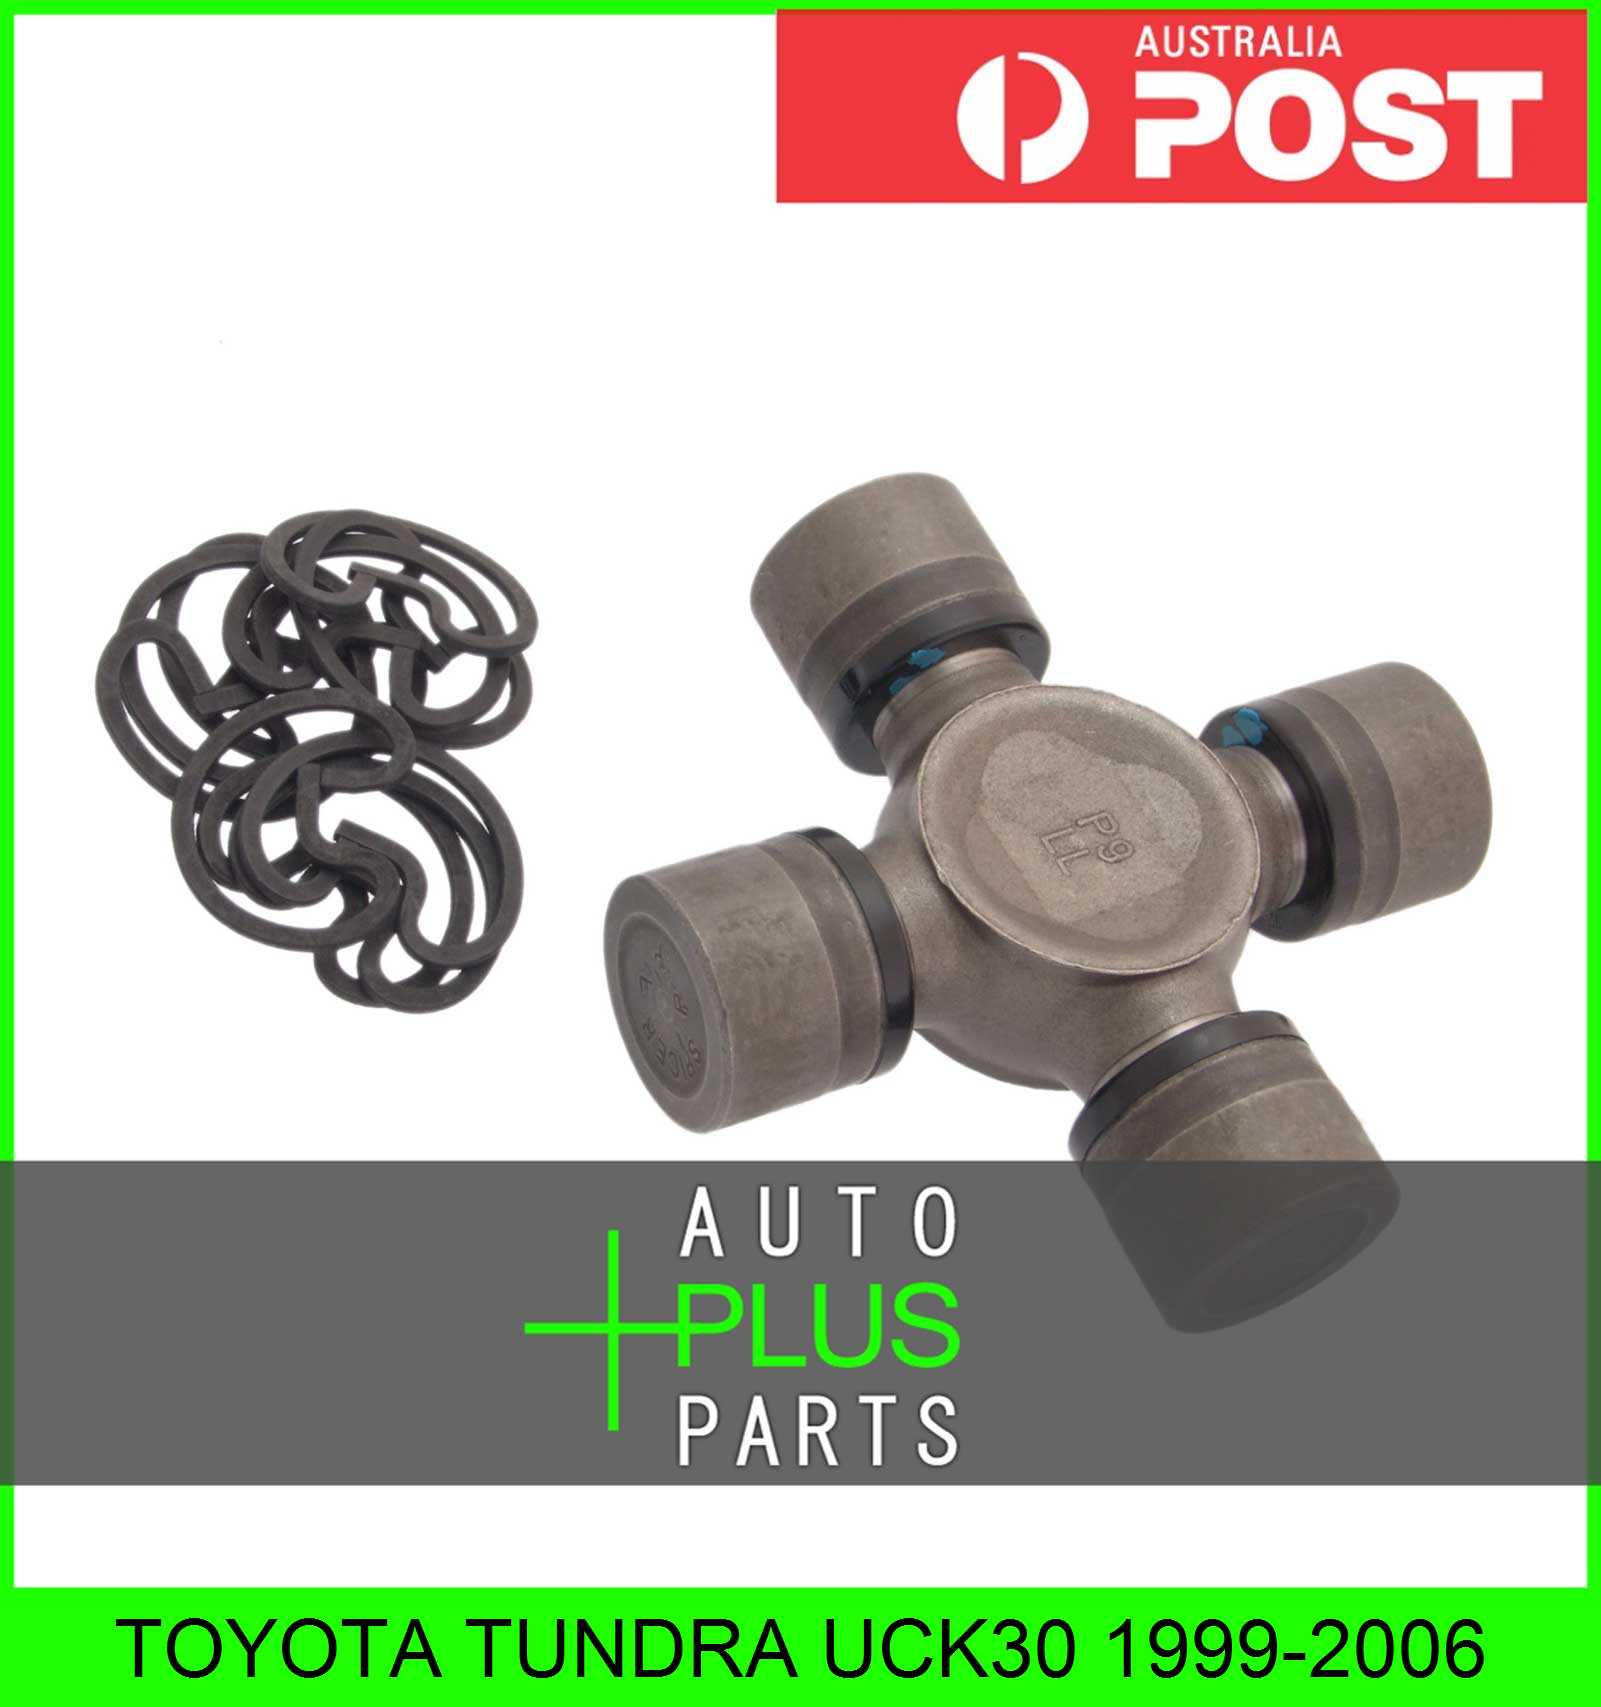 Fits TOYOTA TUNDRA UCK30 1999-2006 - Uni Joints Drive Shaft 27X92 | eBay